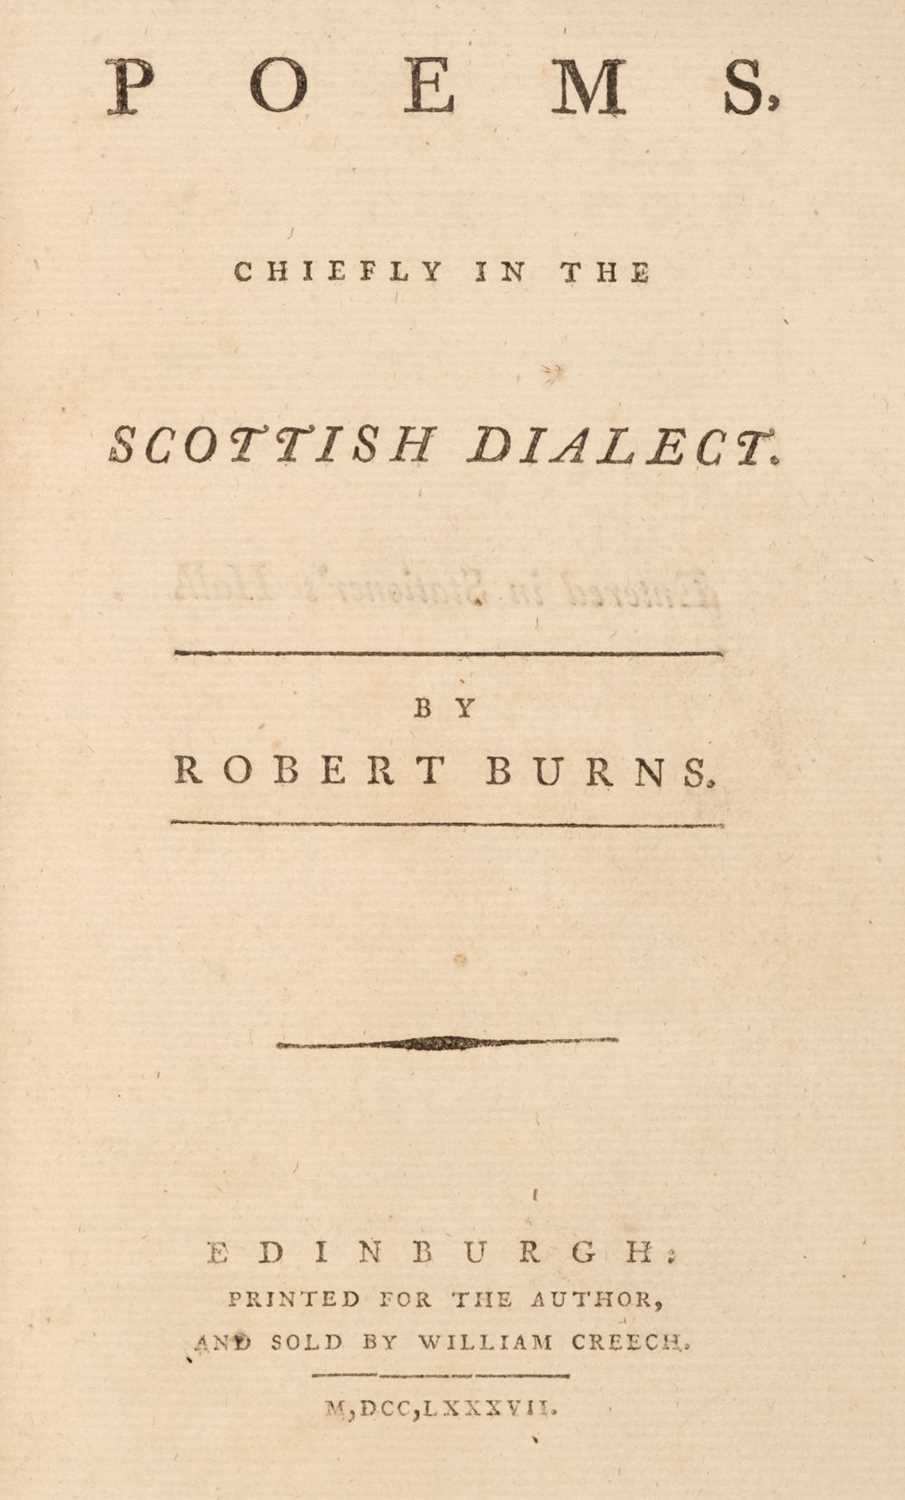 Lot 152 - Burns (Robert). Poems, 1st Edinburgh edition, 1787